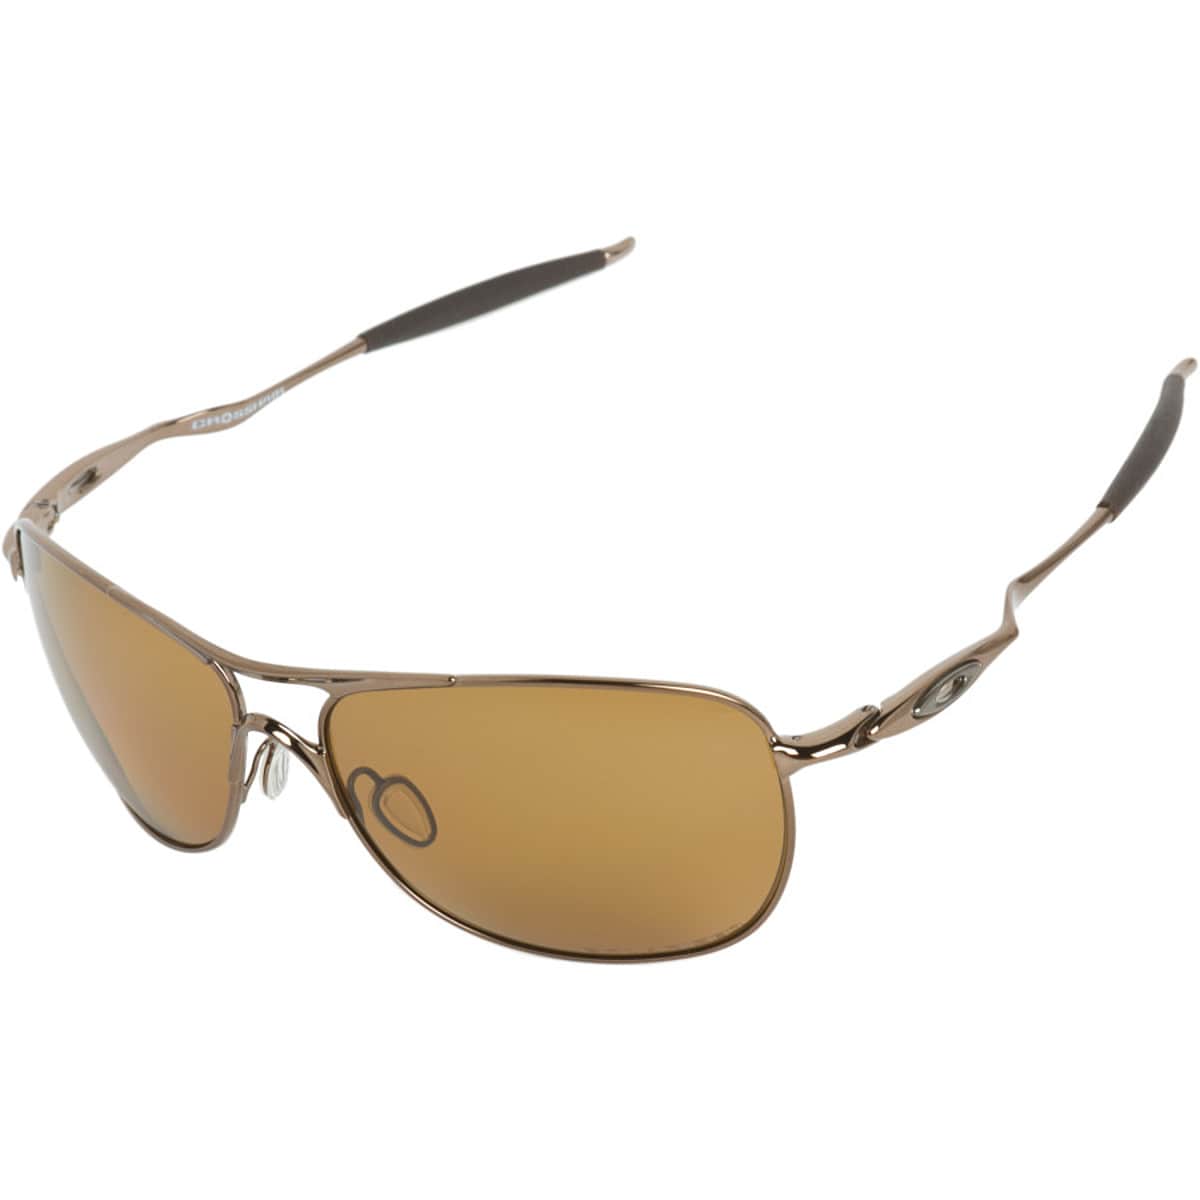 Oakley Crosshair Polarized Sunglasses - Men's - Accessories